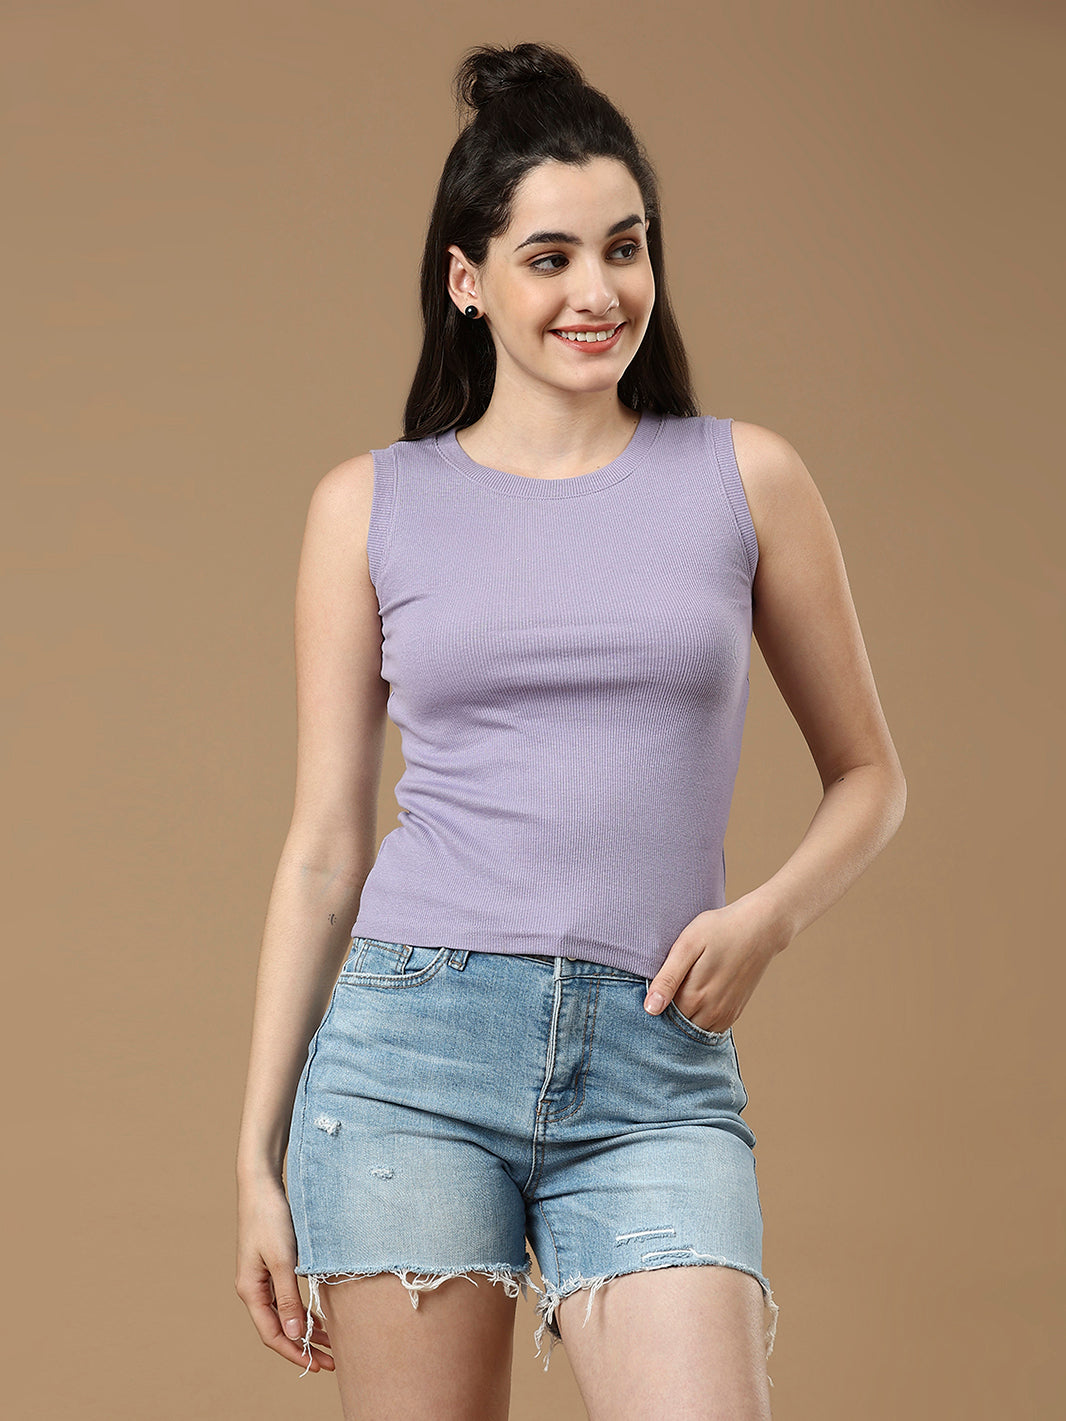 Women Sleeveless Lavender Color Top